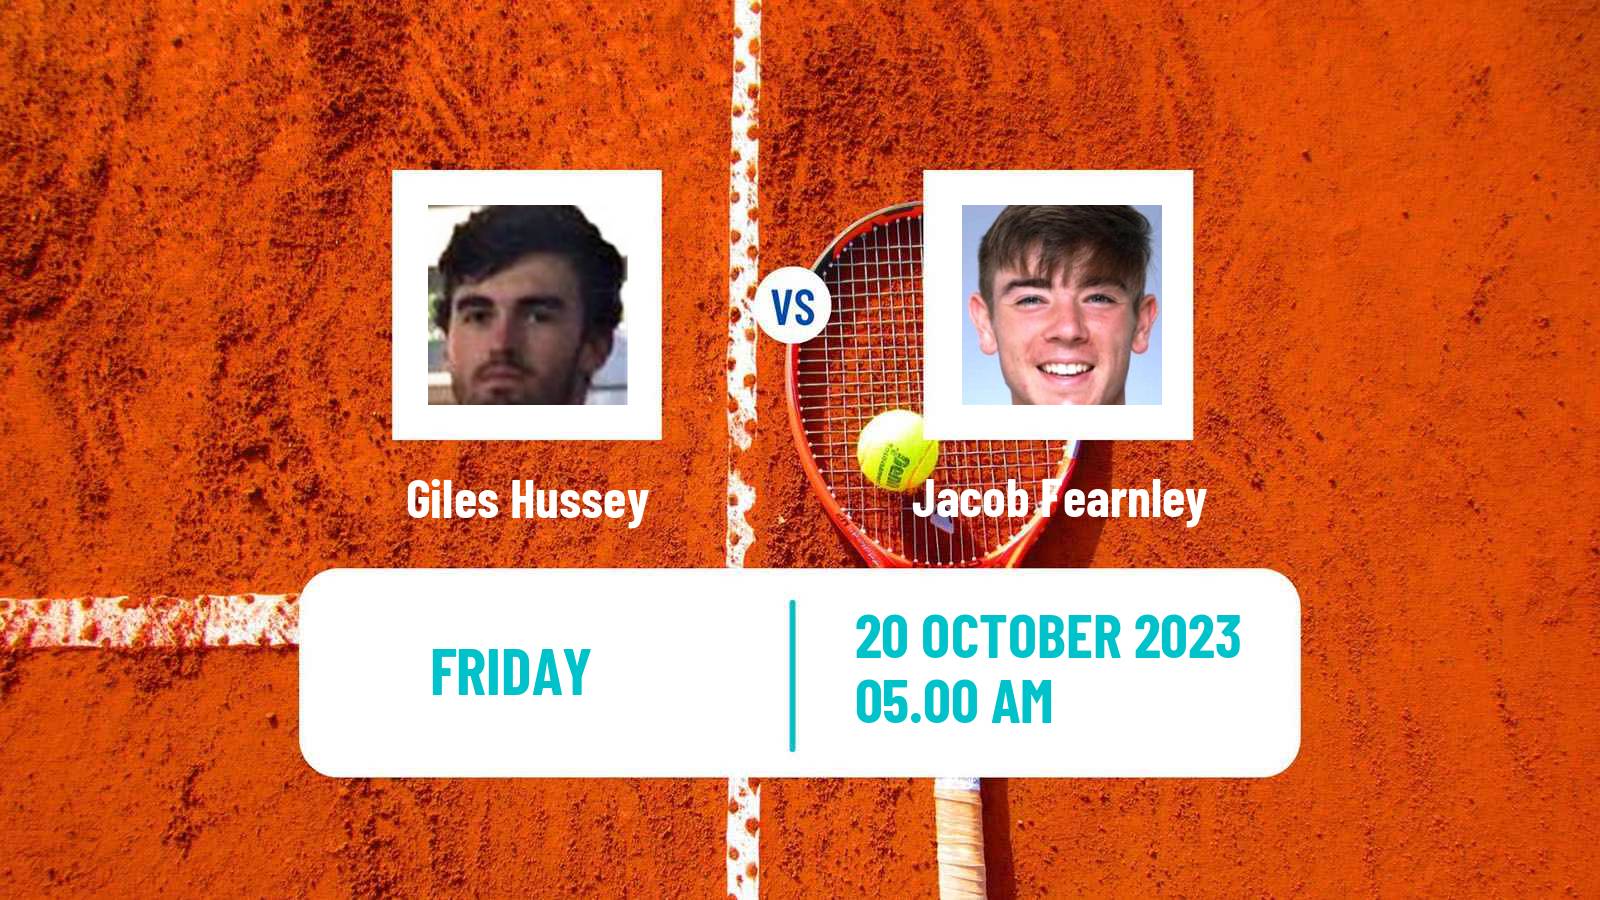 Tennis ITF M25 Edgbaston Men Giles Hussey - Jacob Fearnley